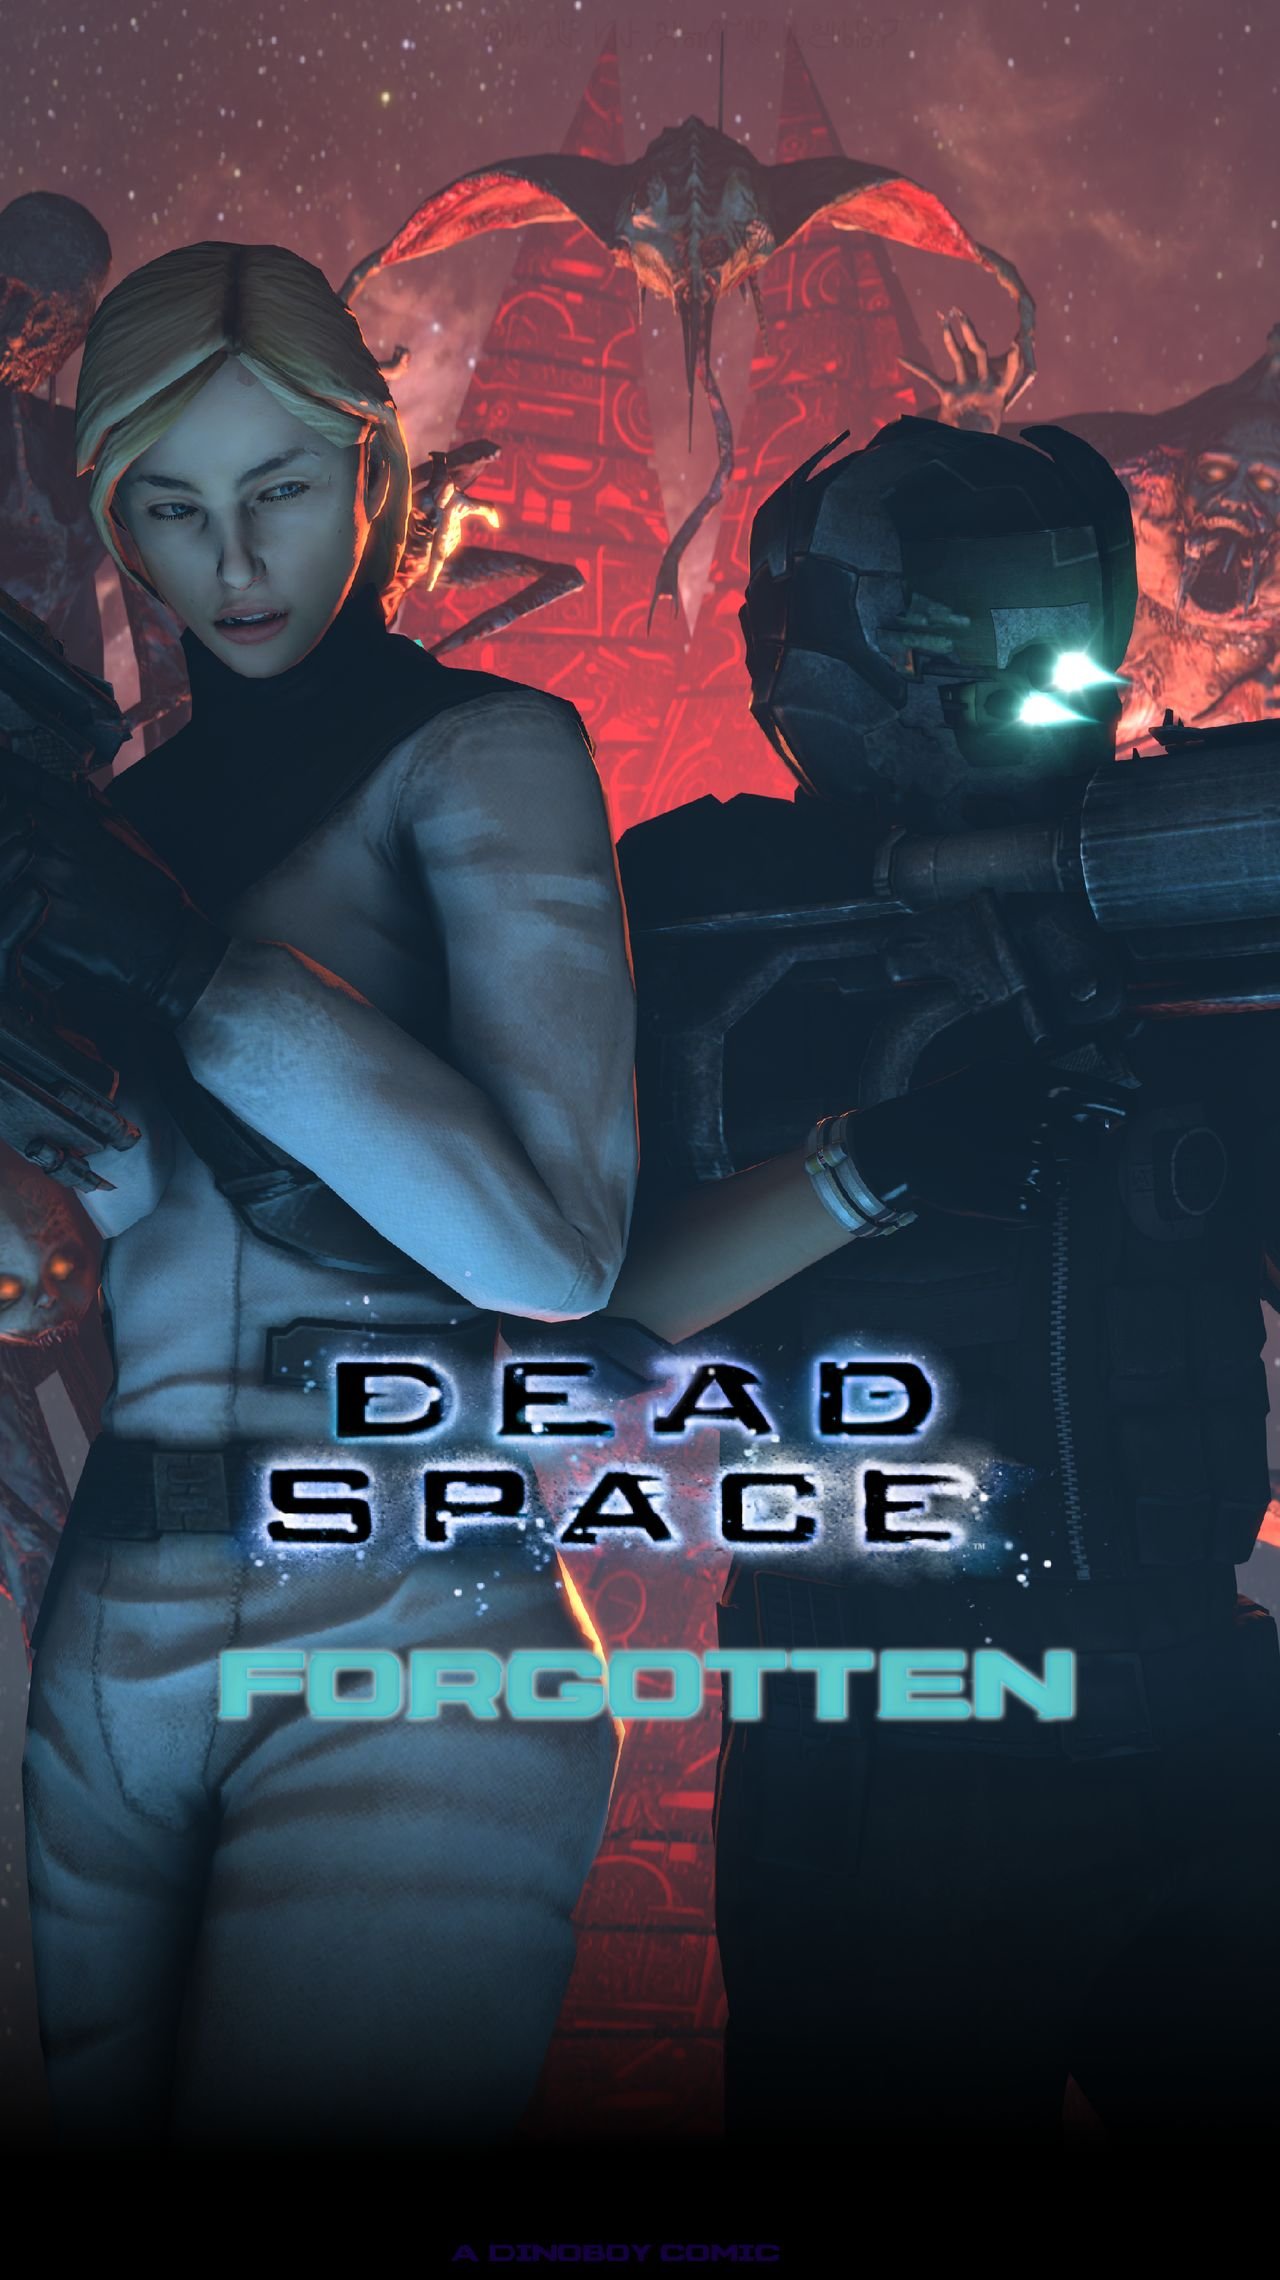 Dead space 3 porn comic